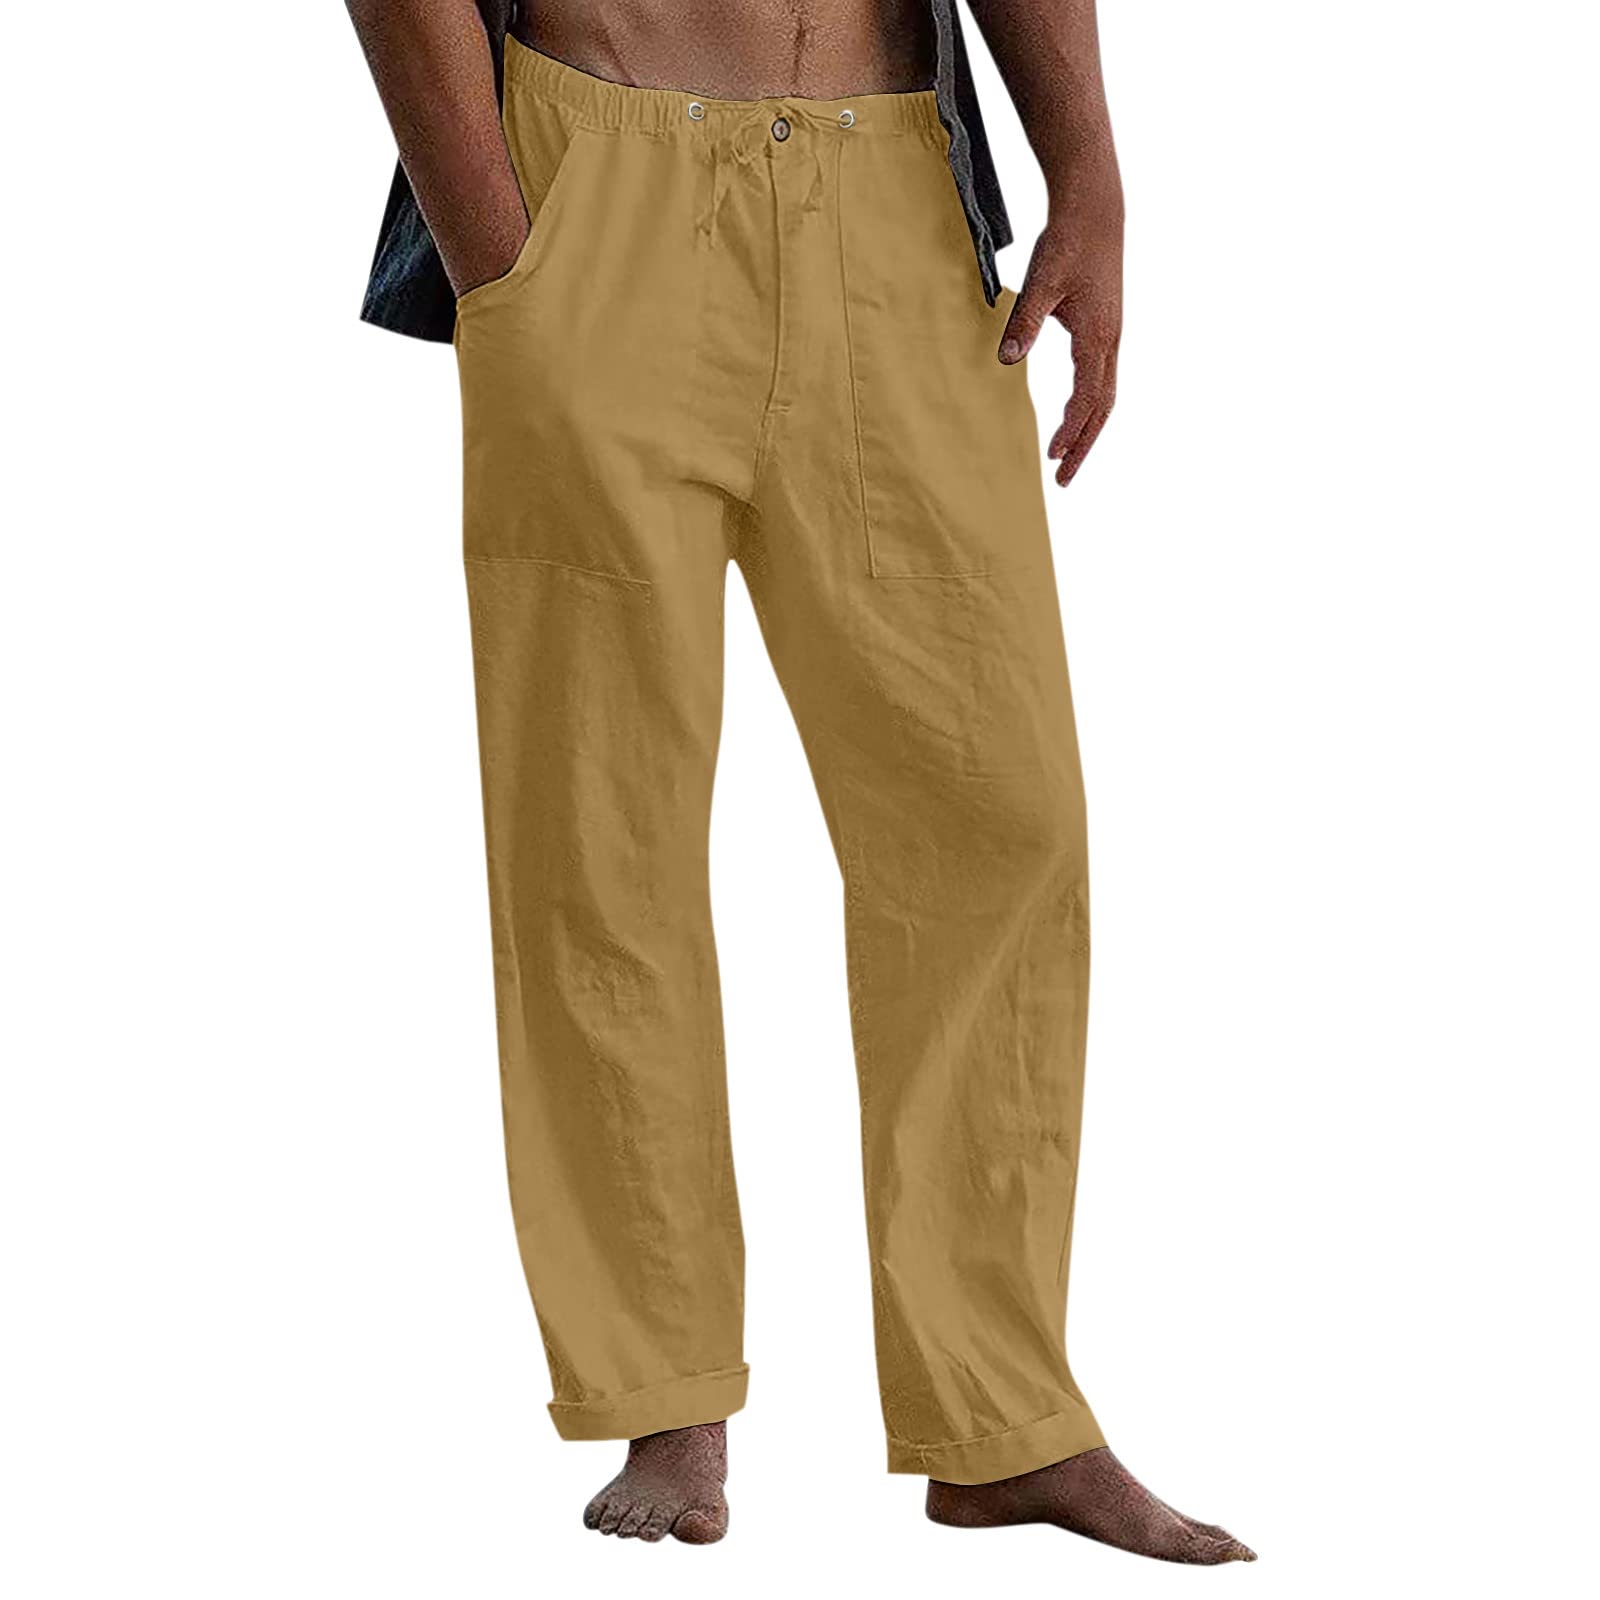 Mens Linen Pants With Pleats, Linen Joggers, Mens Trousers, Navy